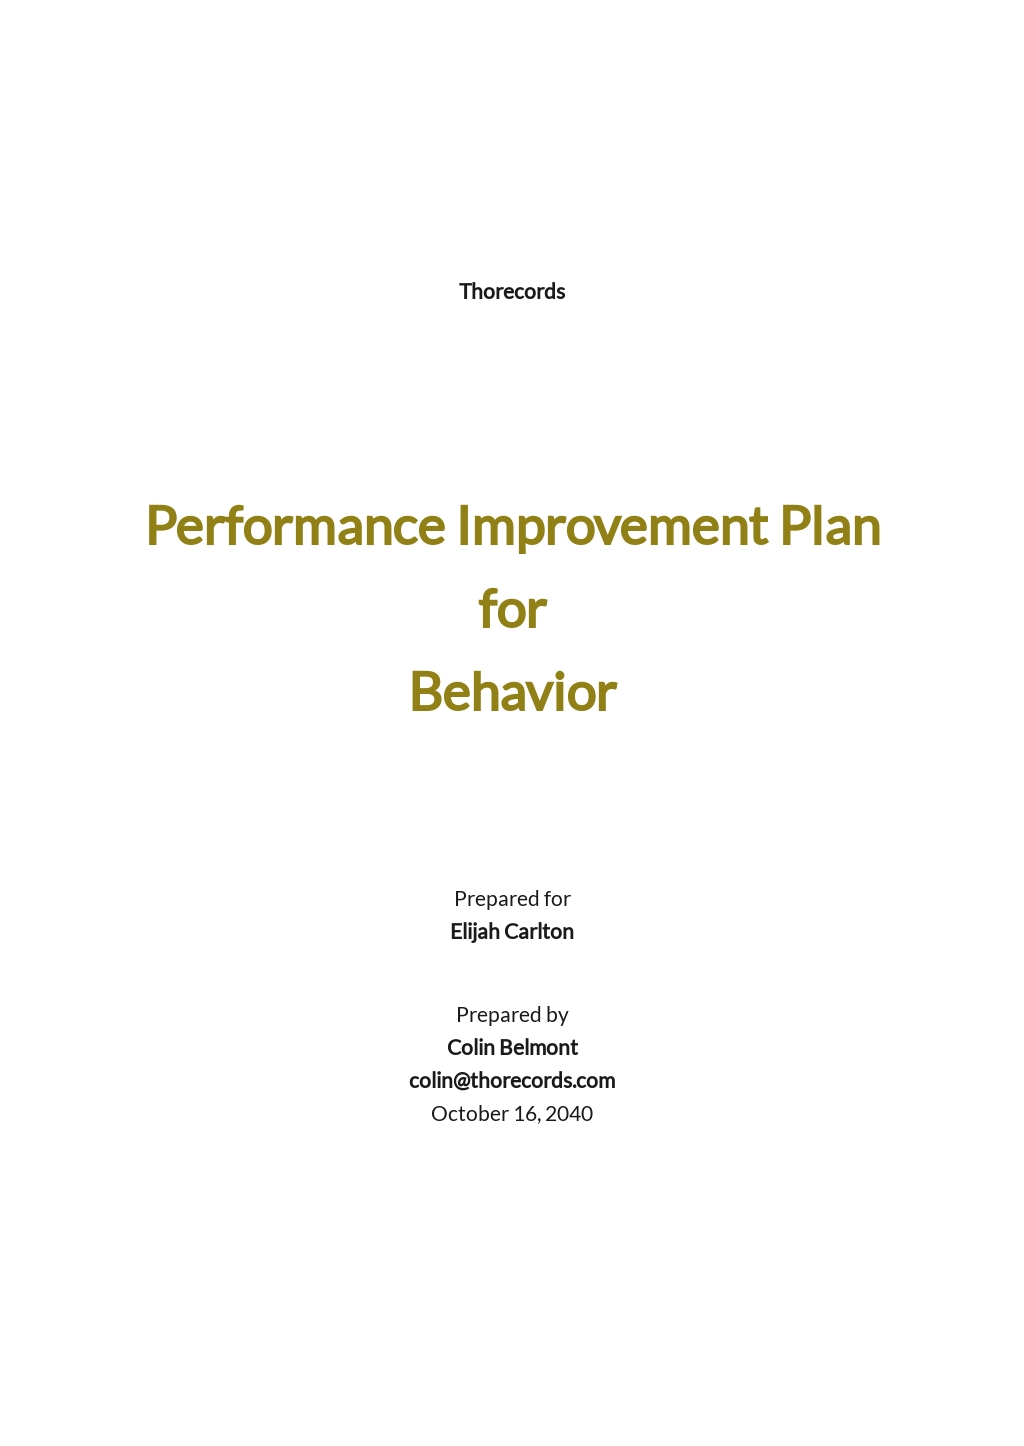 Performance Improvement Plan for Behavior.jpe